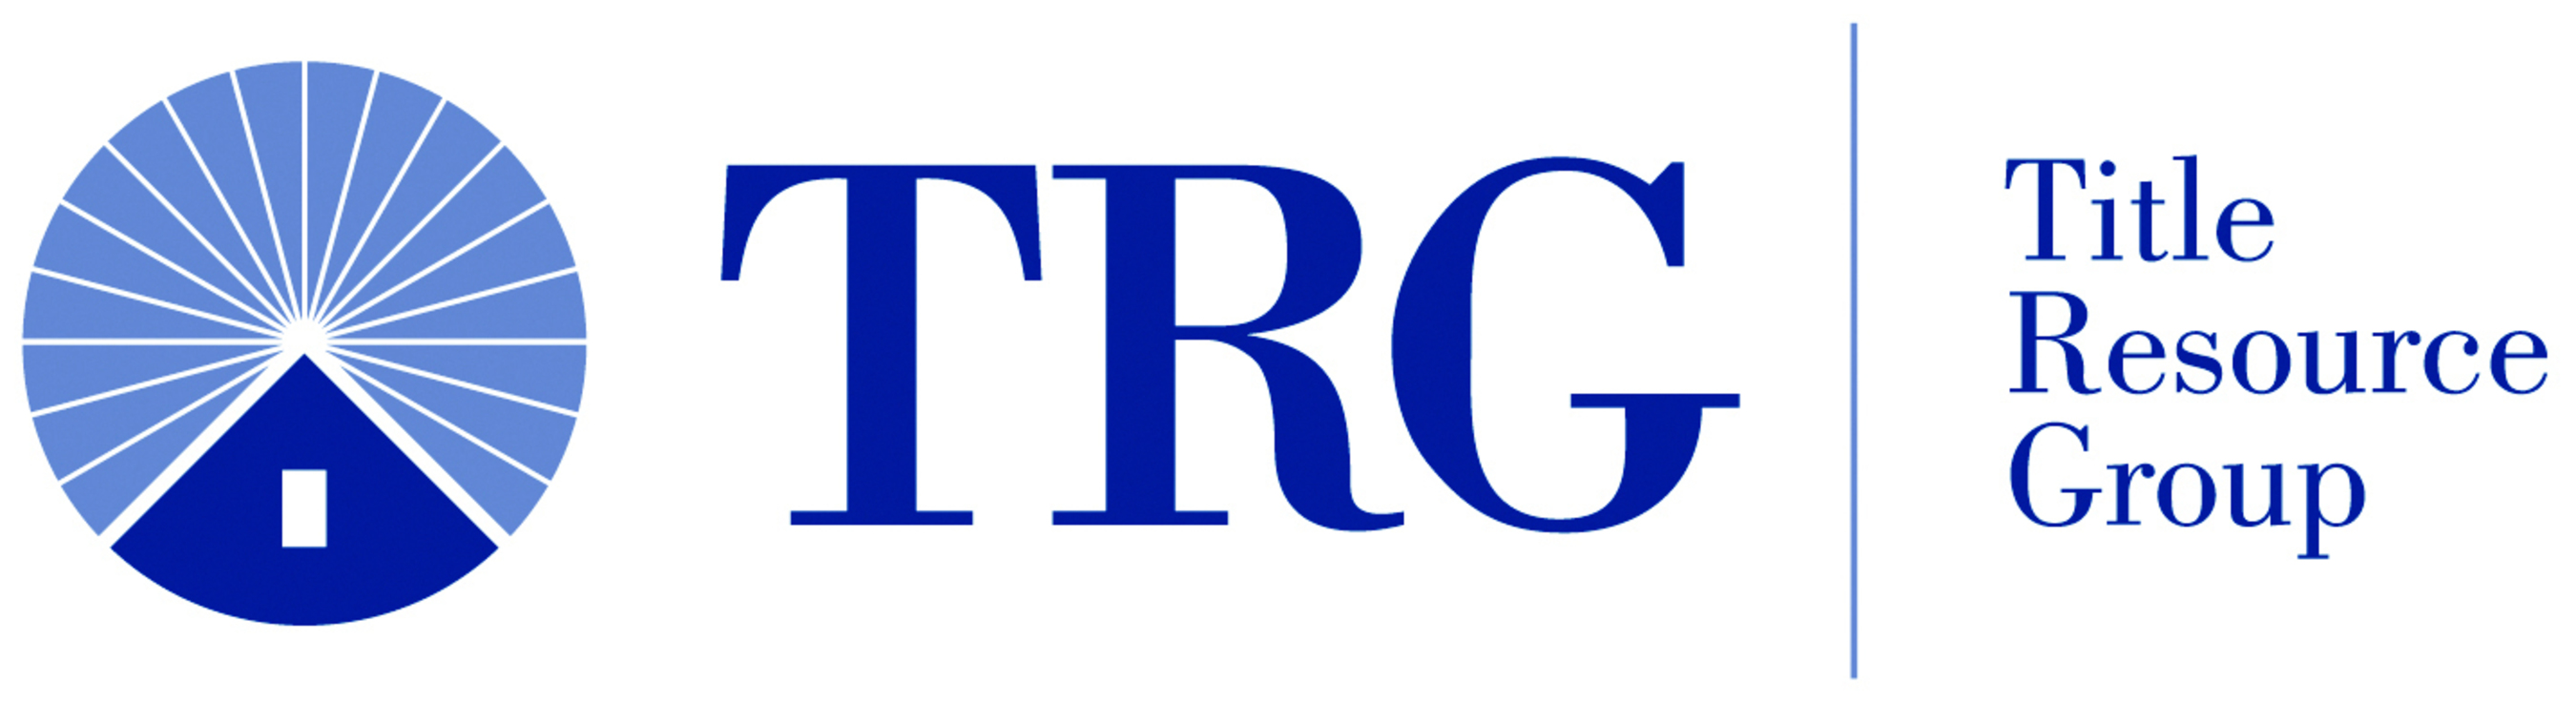 Title Resource Group logo. (PRNewsFoto/Title Resource Group) (PRNewsFoto/Title Resource Group)